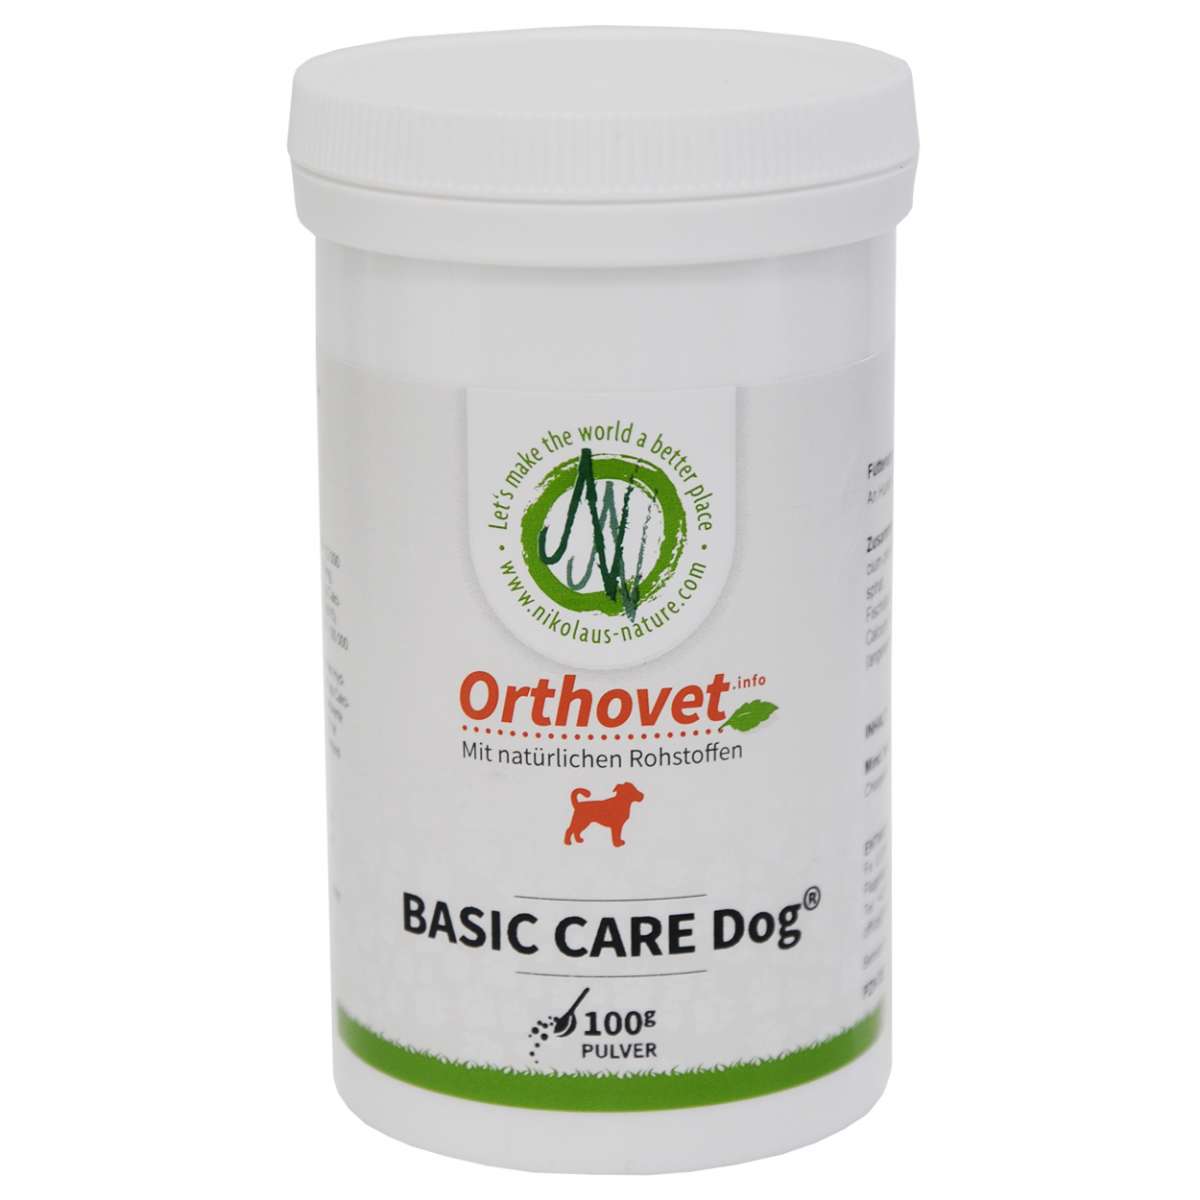 Orthovet Basic Care Dog 100g Mineralzusatz für den Hund Vitamine